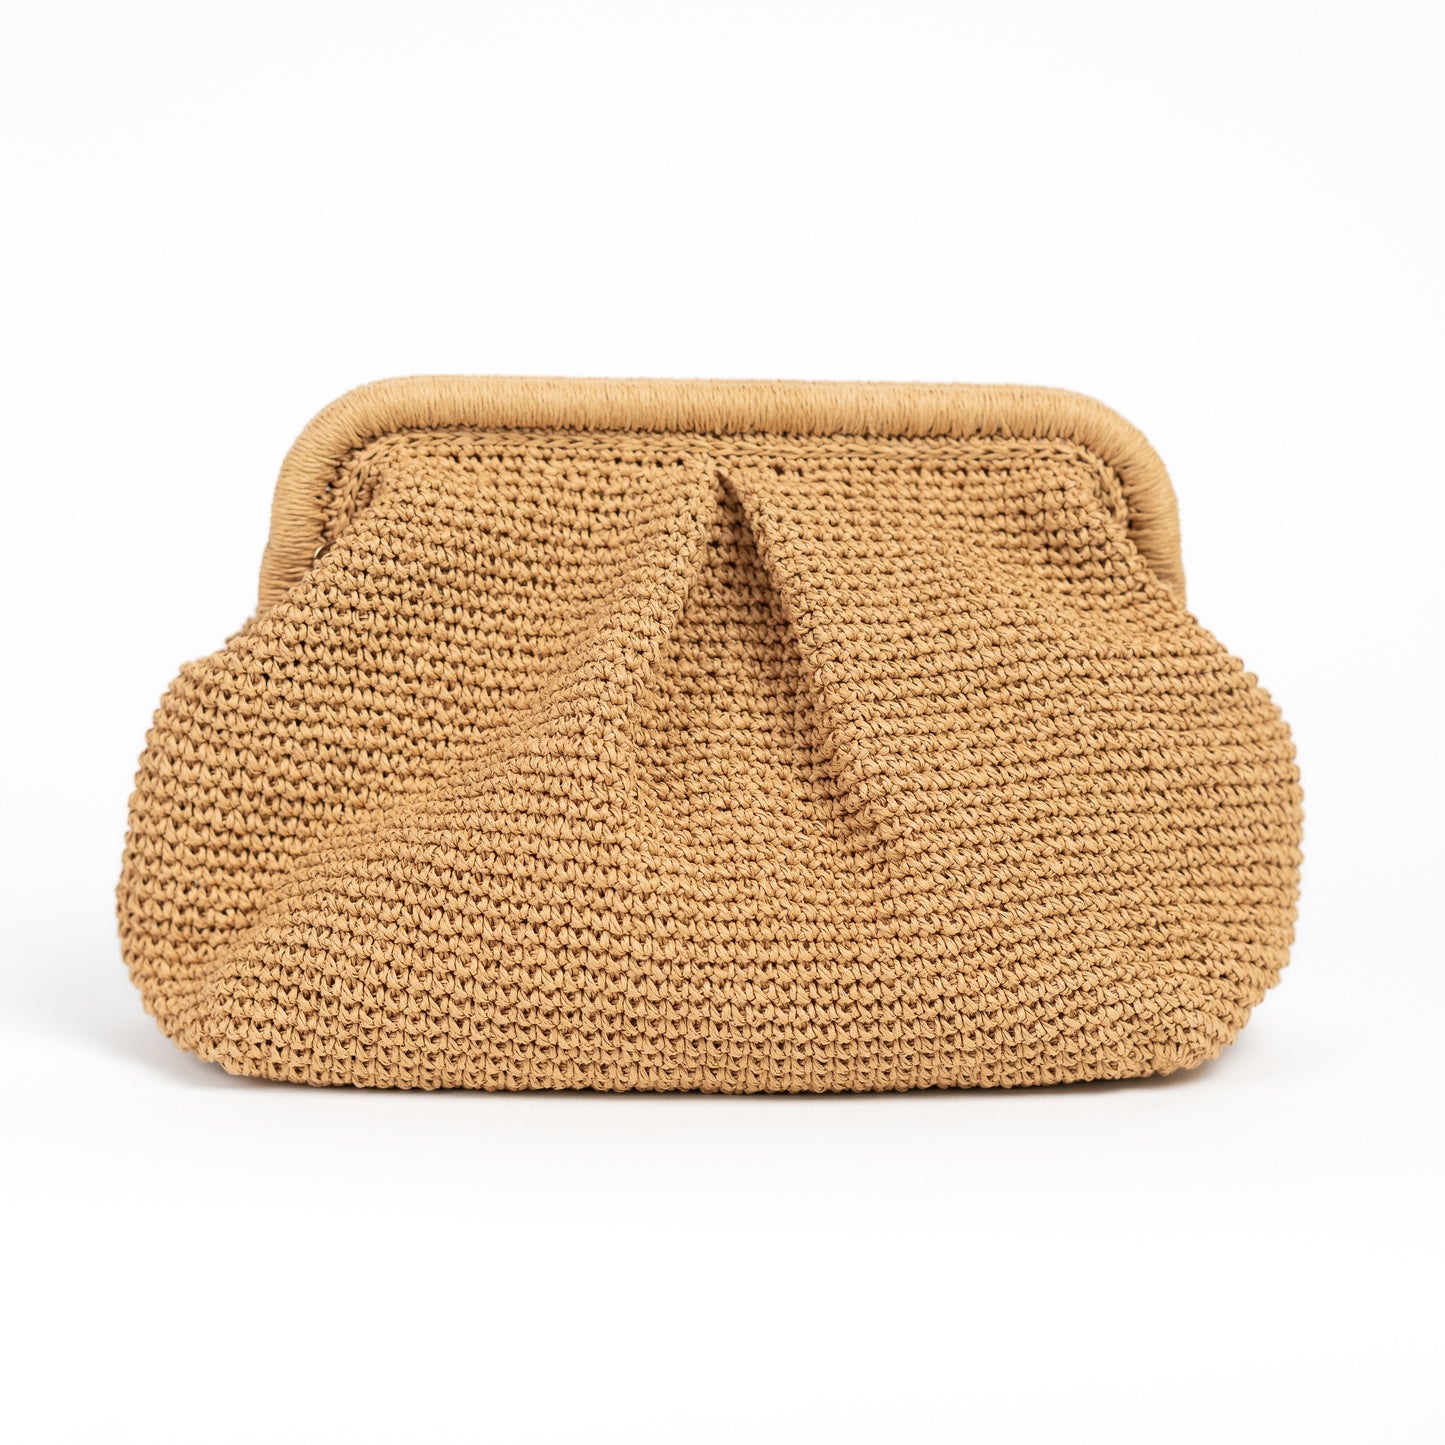 Elegant Straw Crochet Bag